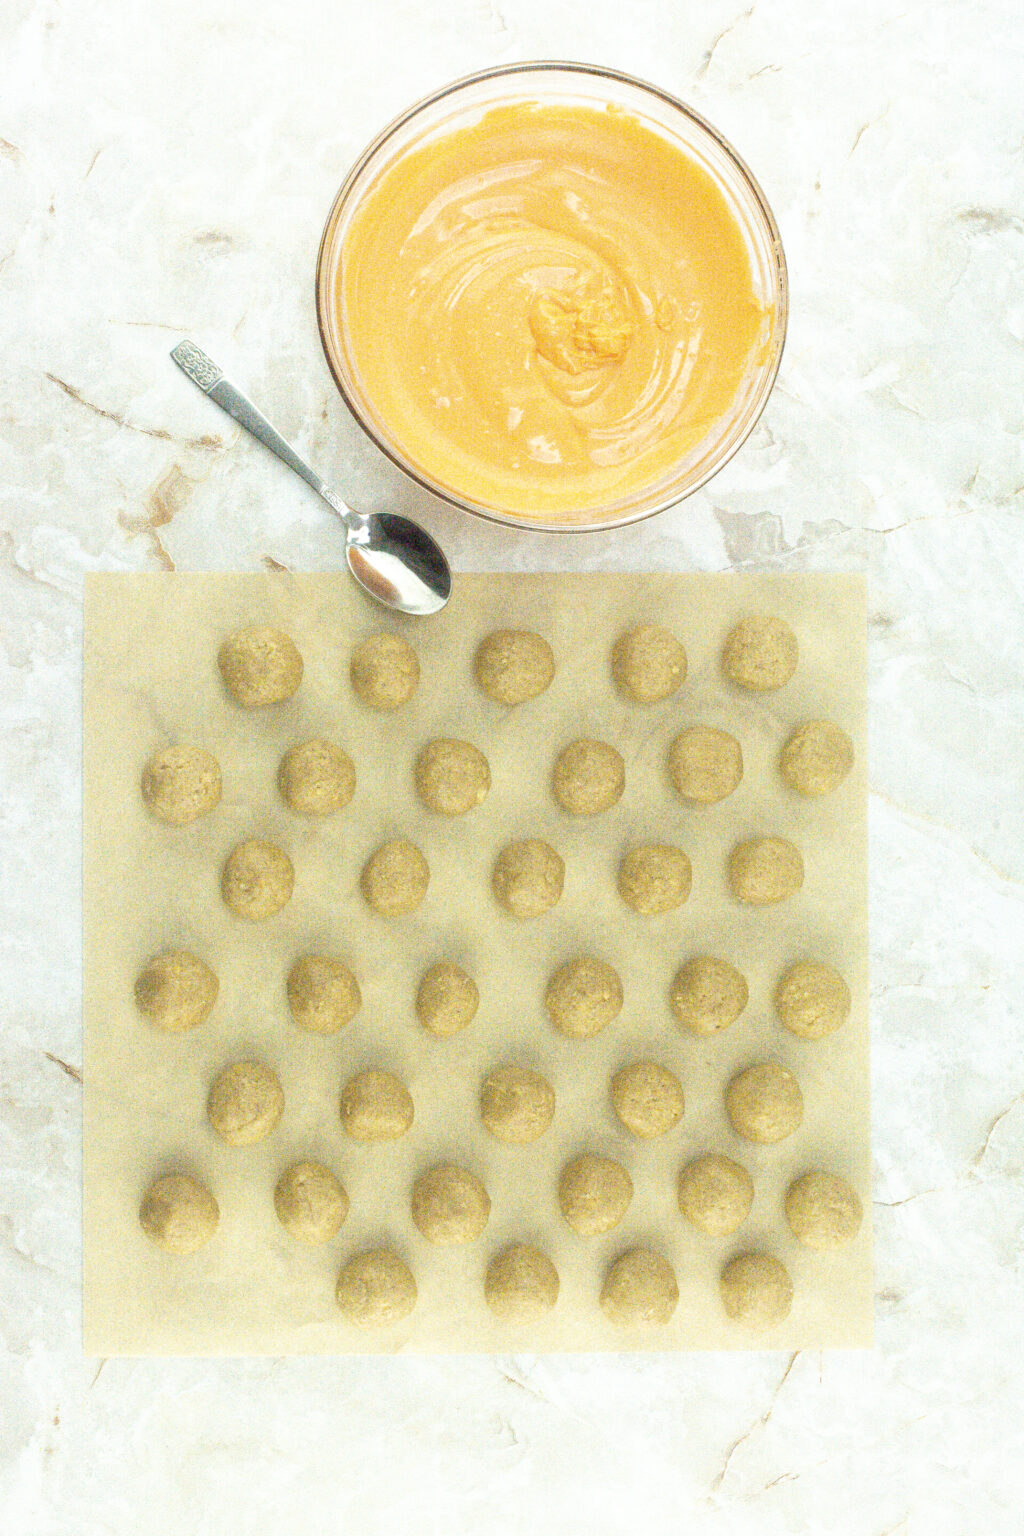 pumpkin pie truffle balls on baking sheet